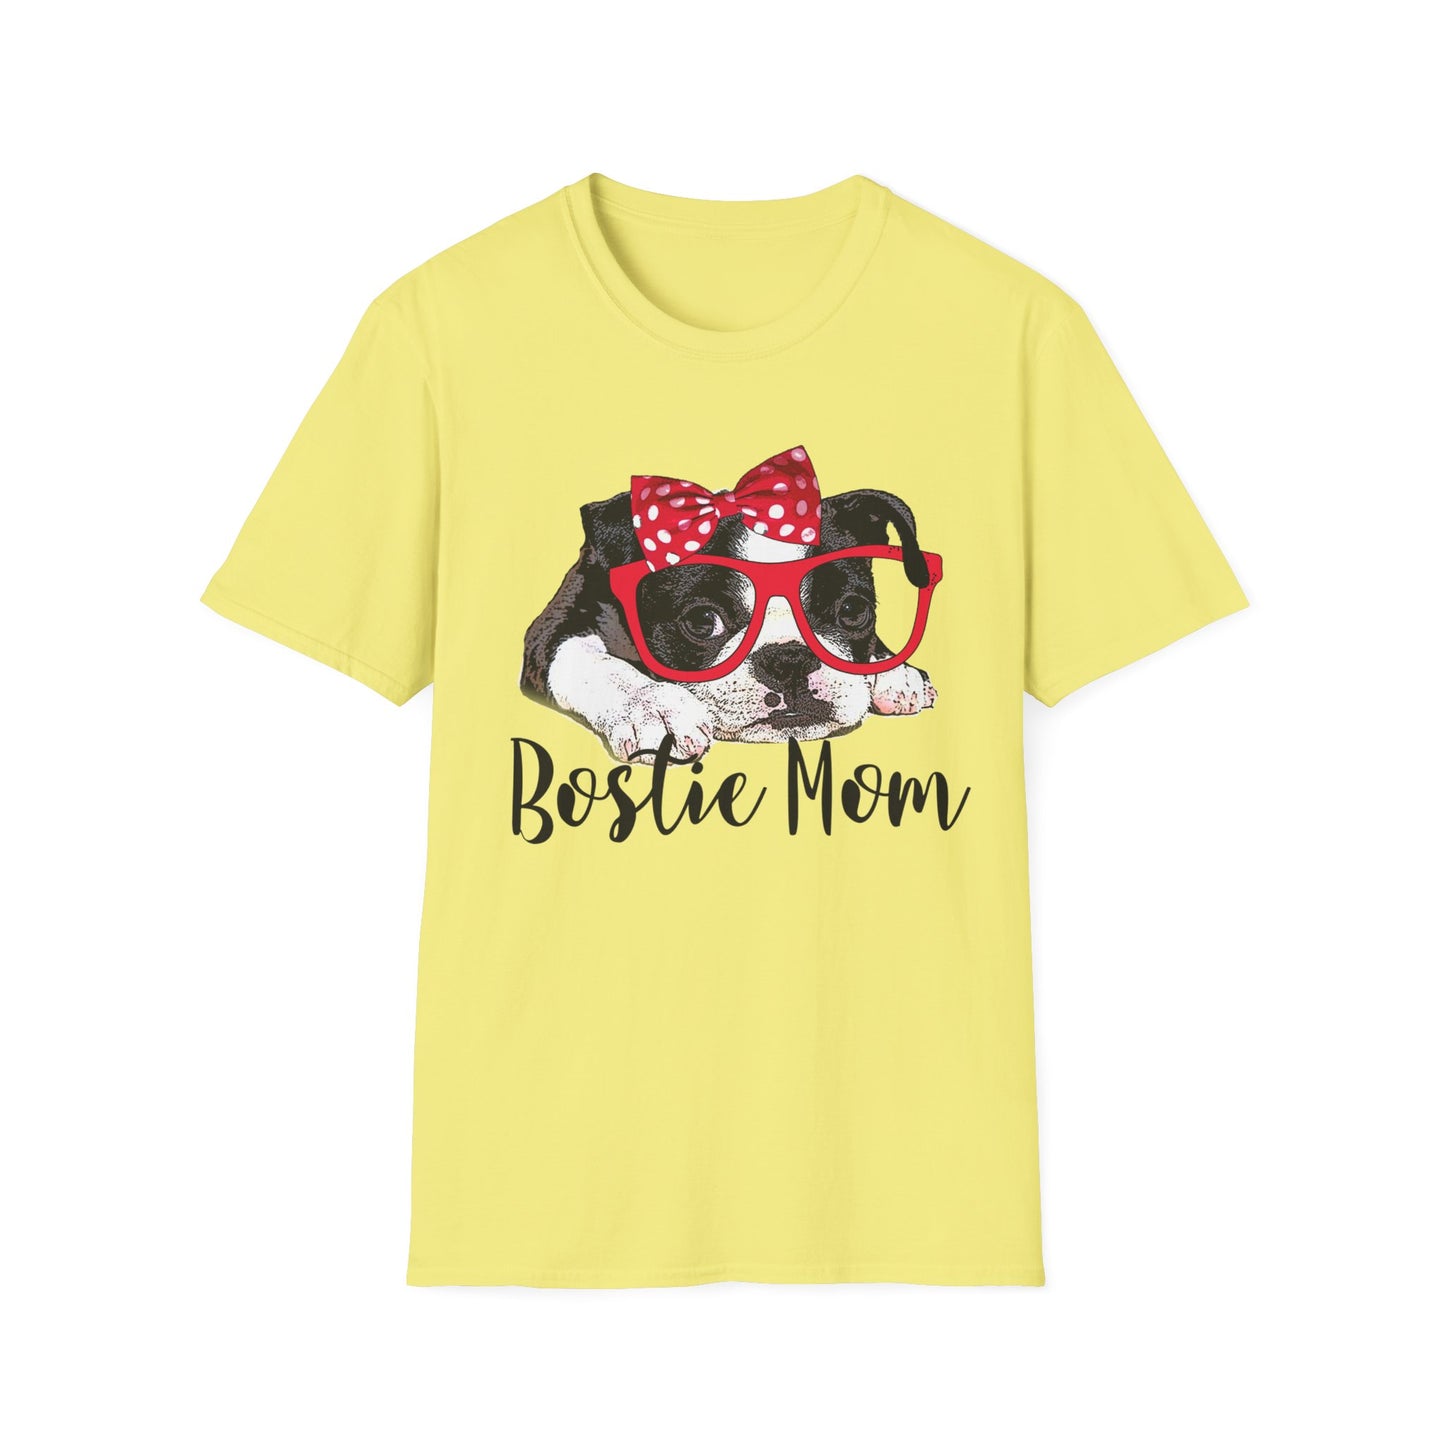 Unisex Softstyle T-Shirt Bostie Mom Boston Terrier